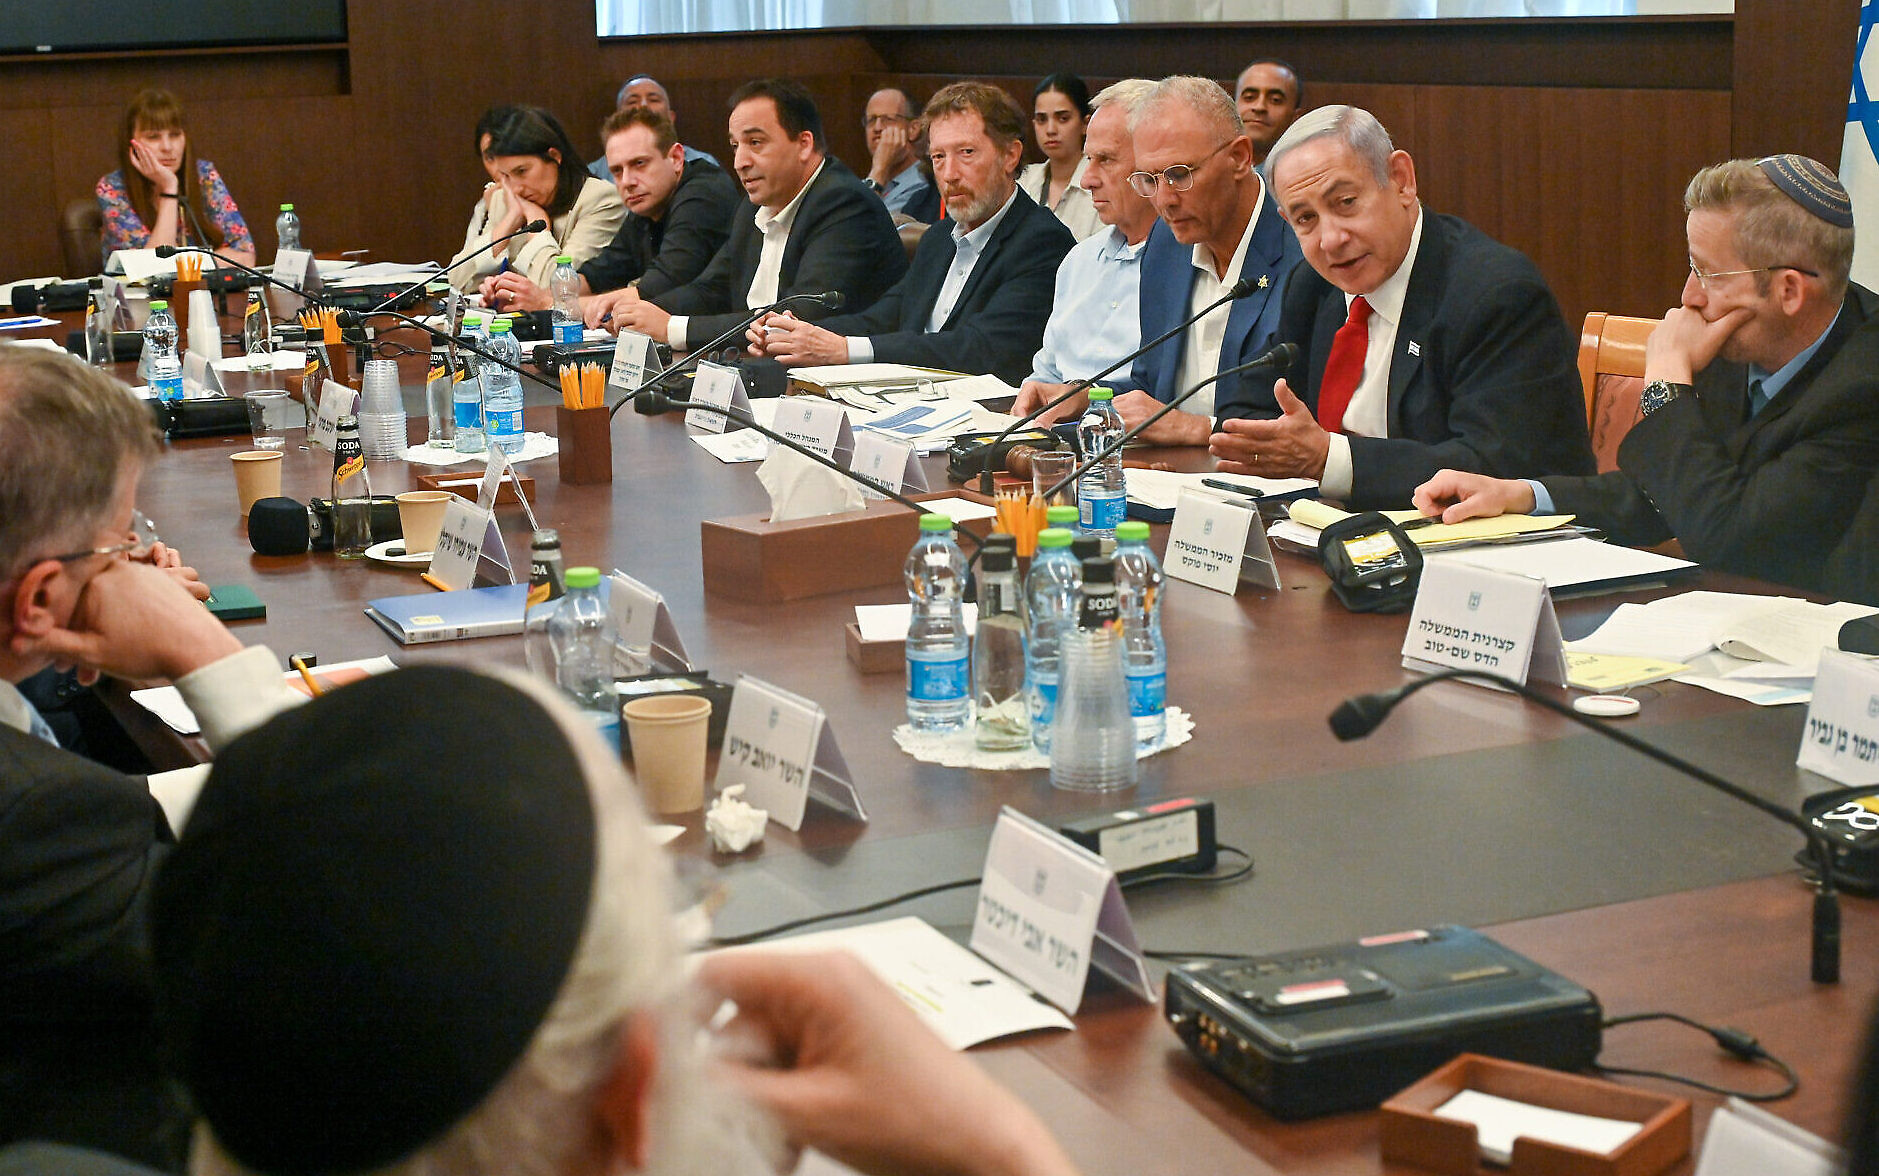 Netanyahu chairs meeting of Arab affairs panel, calls for 'full